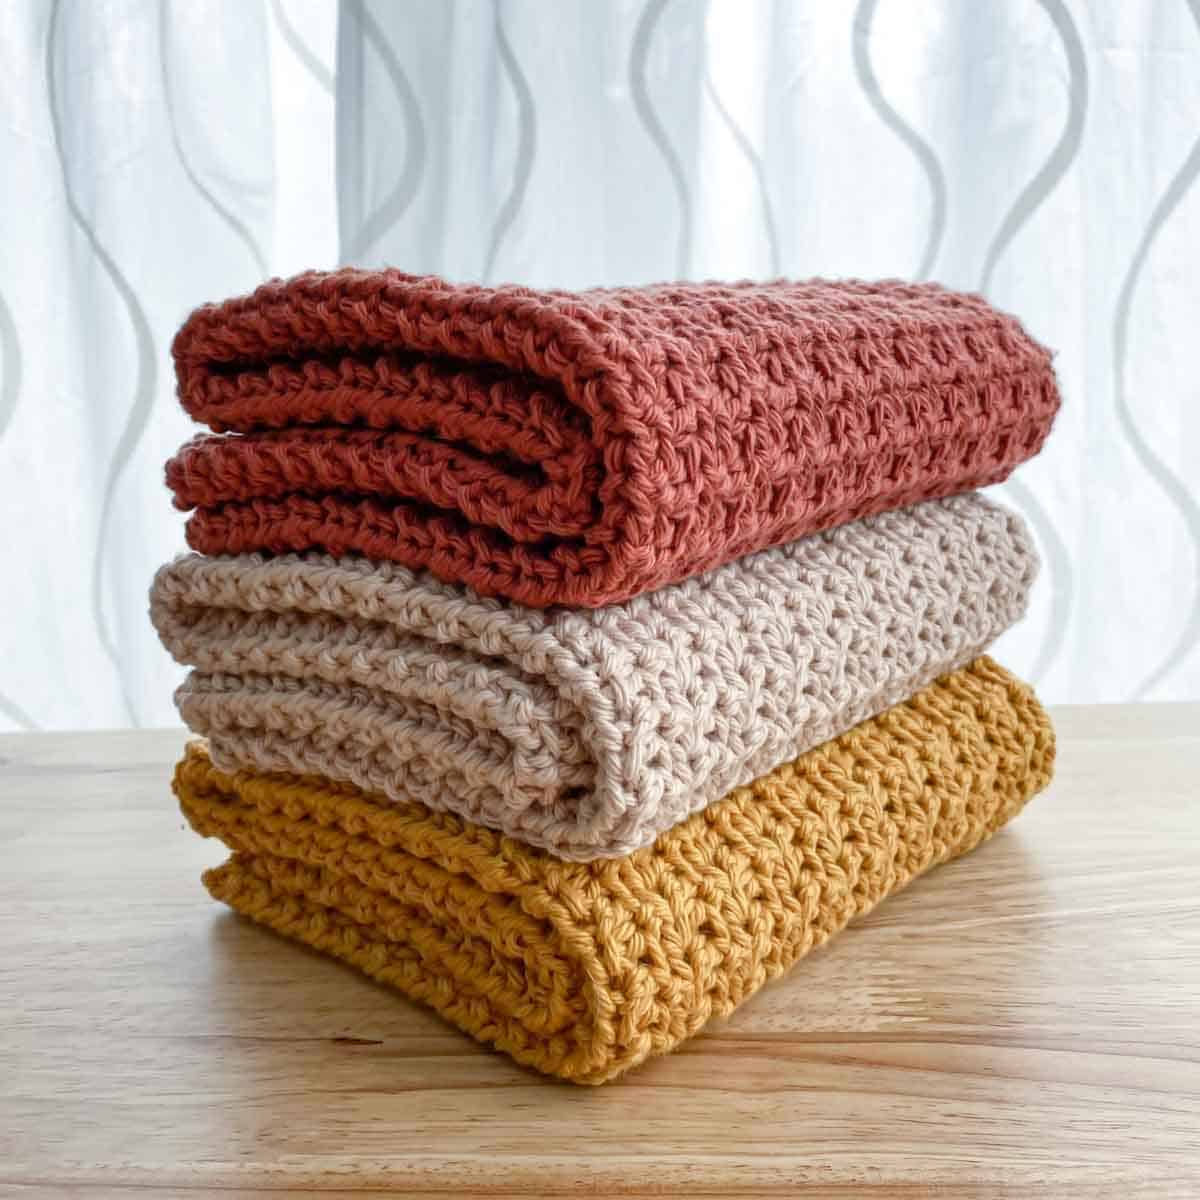 https://www.stitching-together.com/wp-content/uploads/2022/04/crochet-hand-towels-pattern-free.jpg